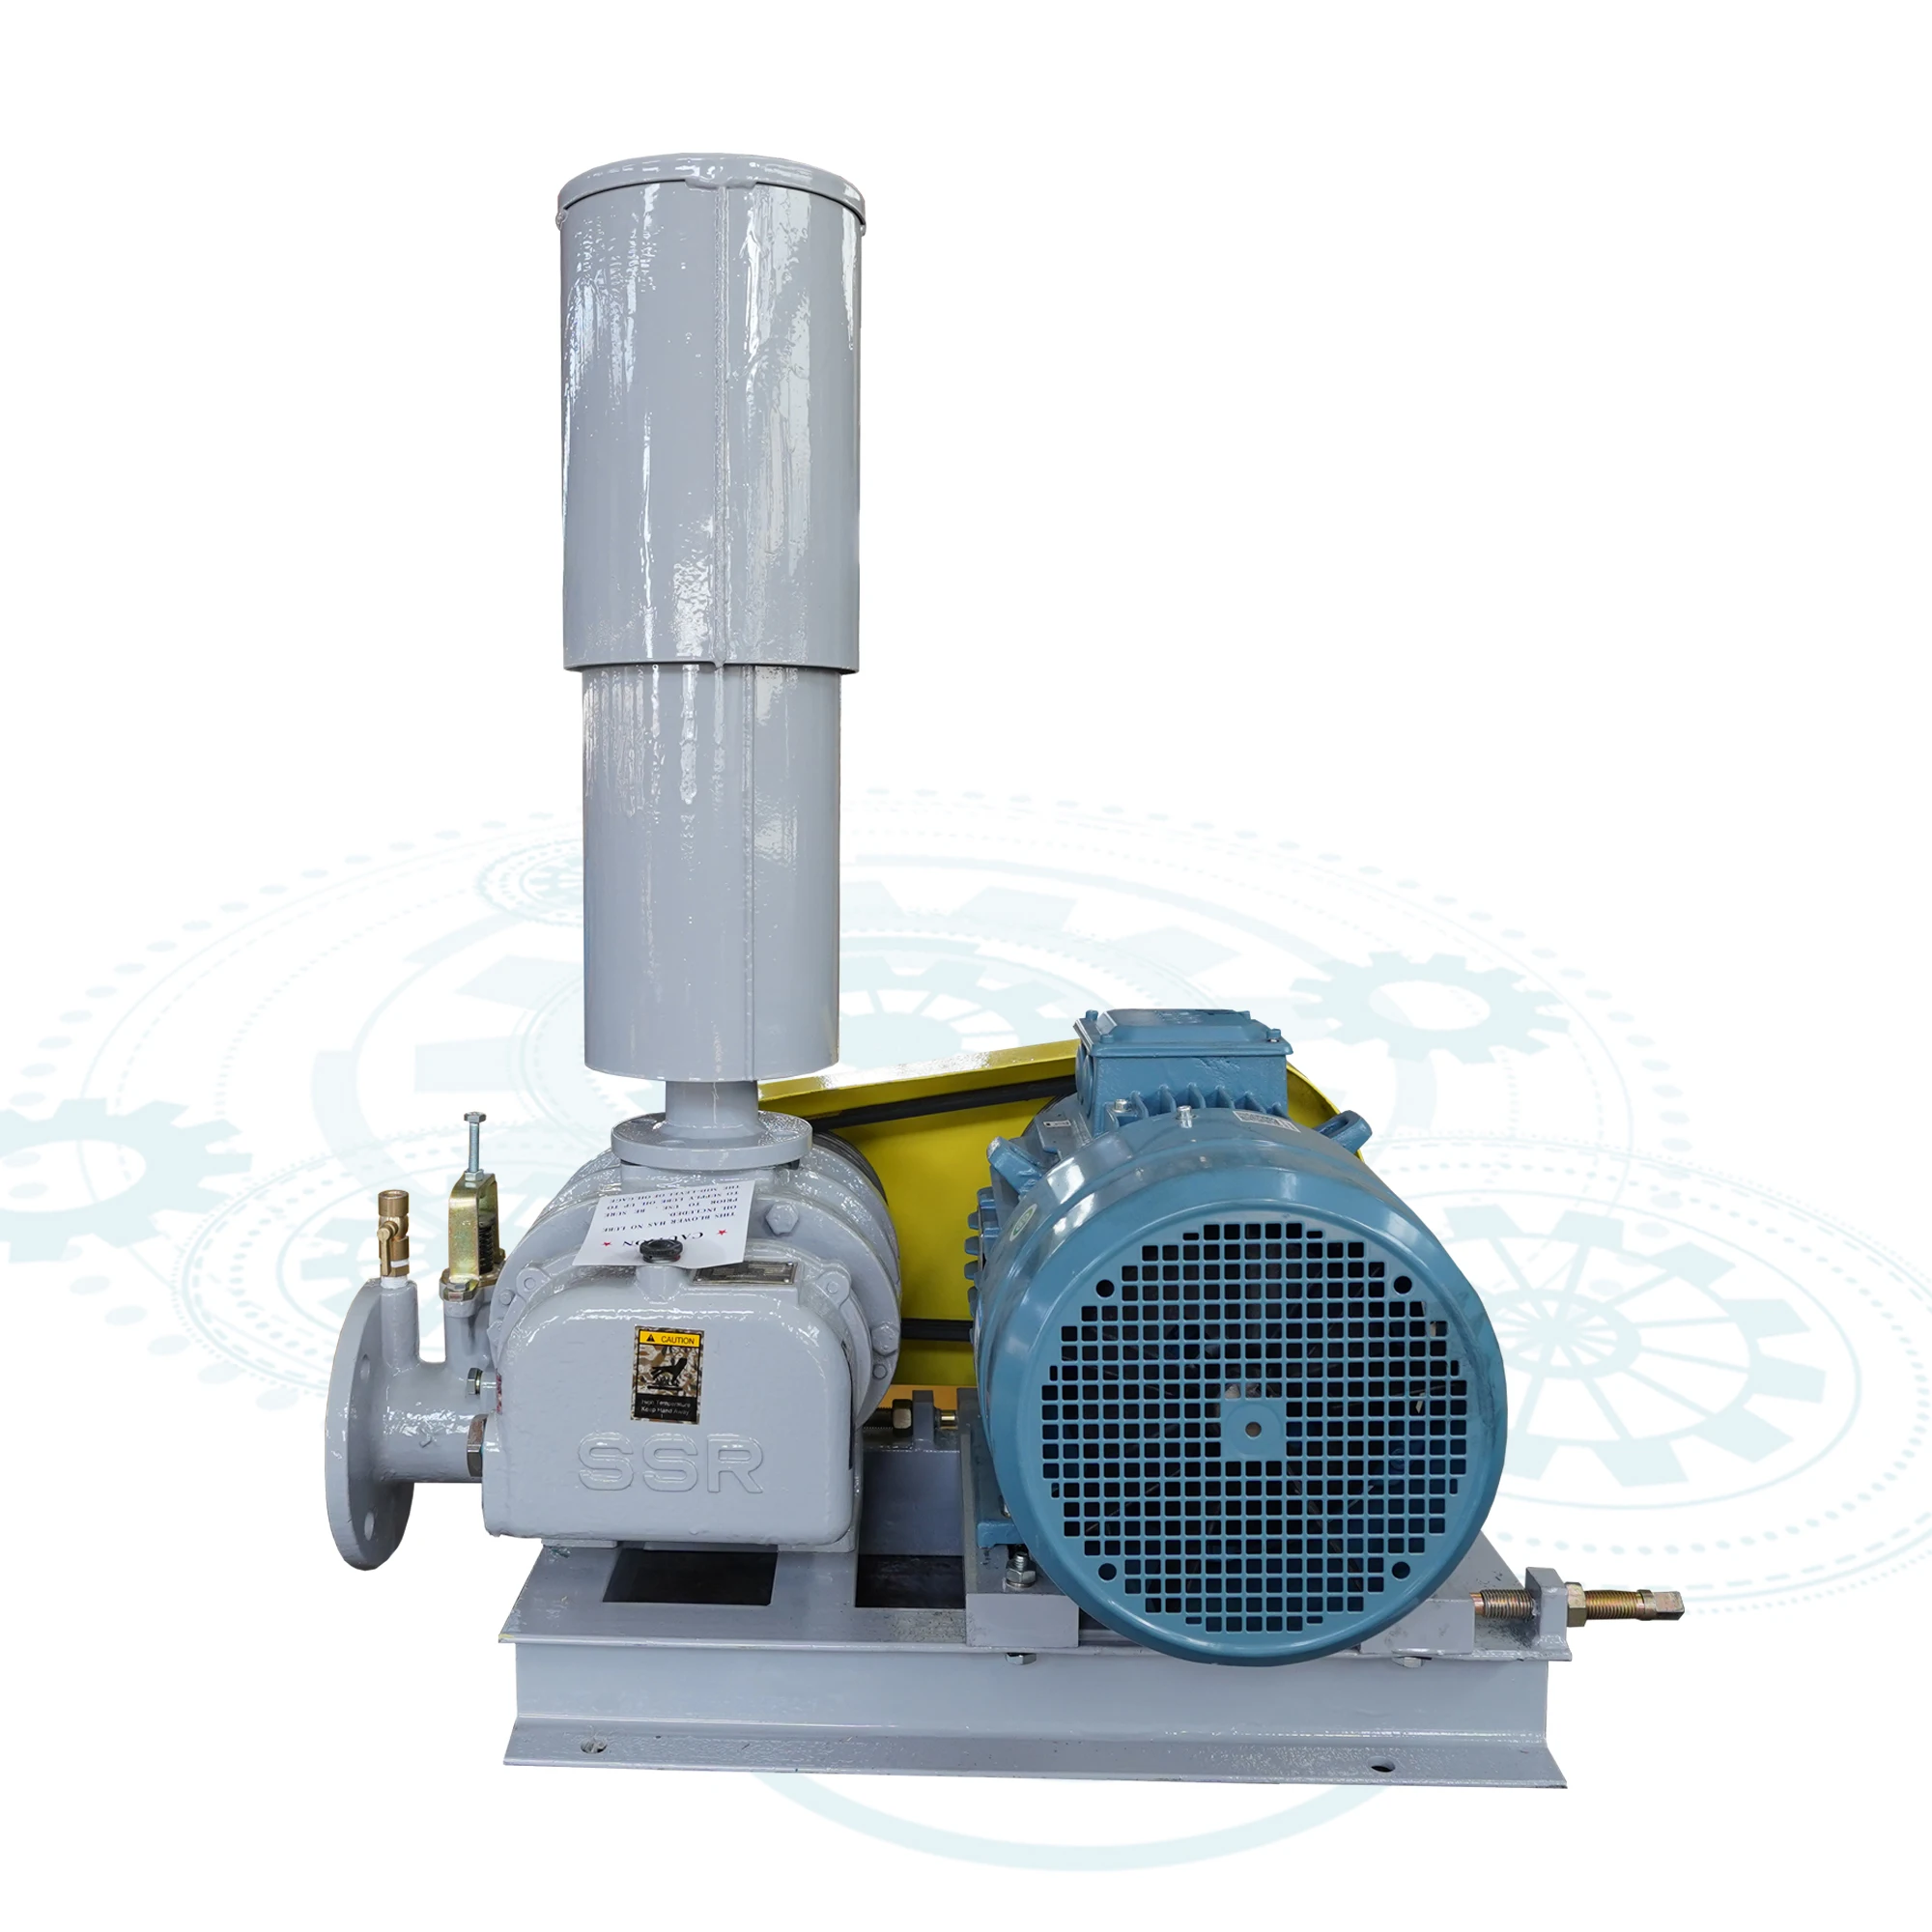 SSR-65 Drive gear blower for  sewage treatment